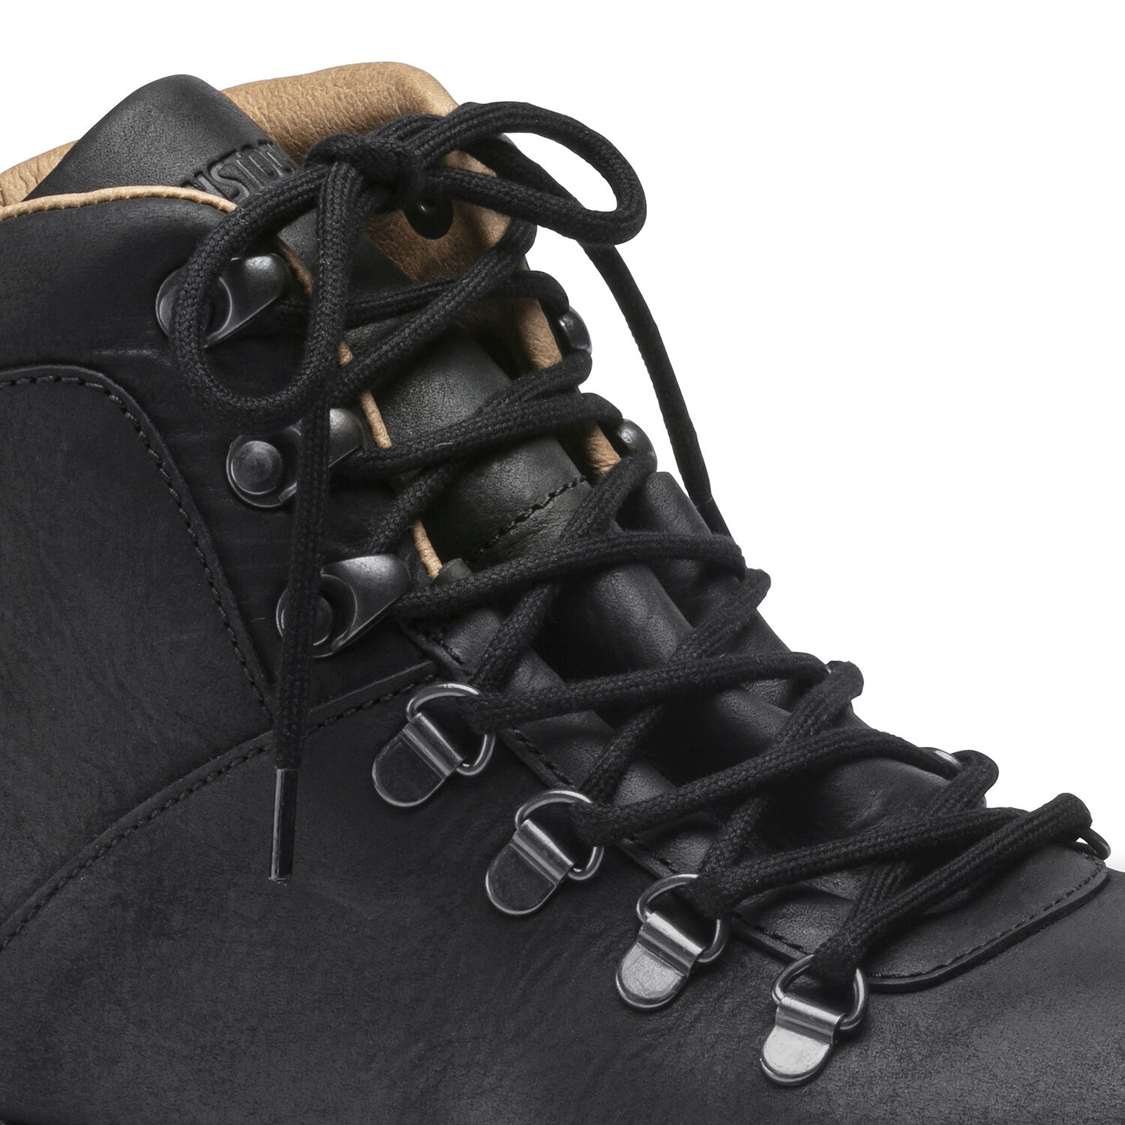 Birkenstock Jackson Nubuck Leather Boots Black | Ci9gc5rdiXm